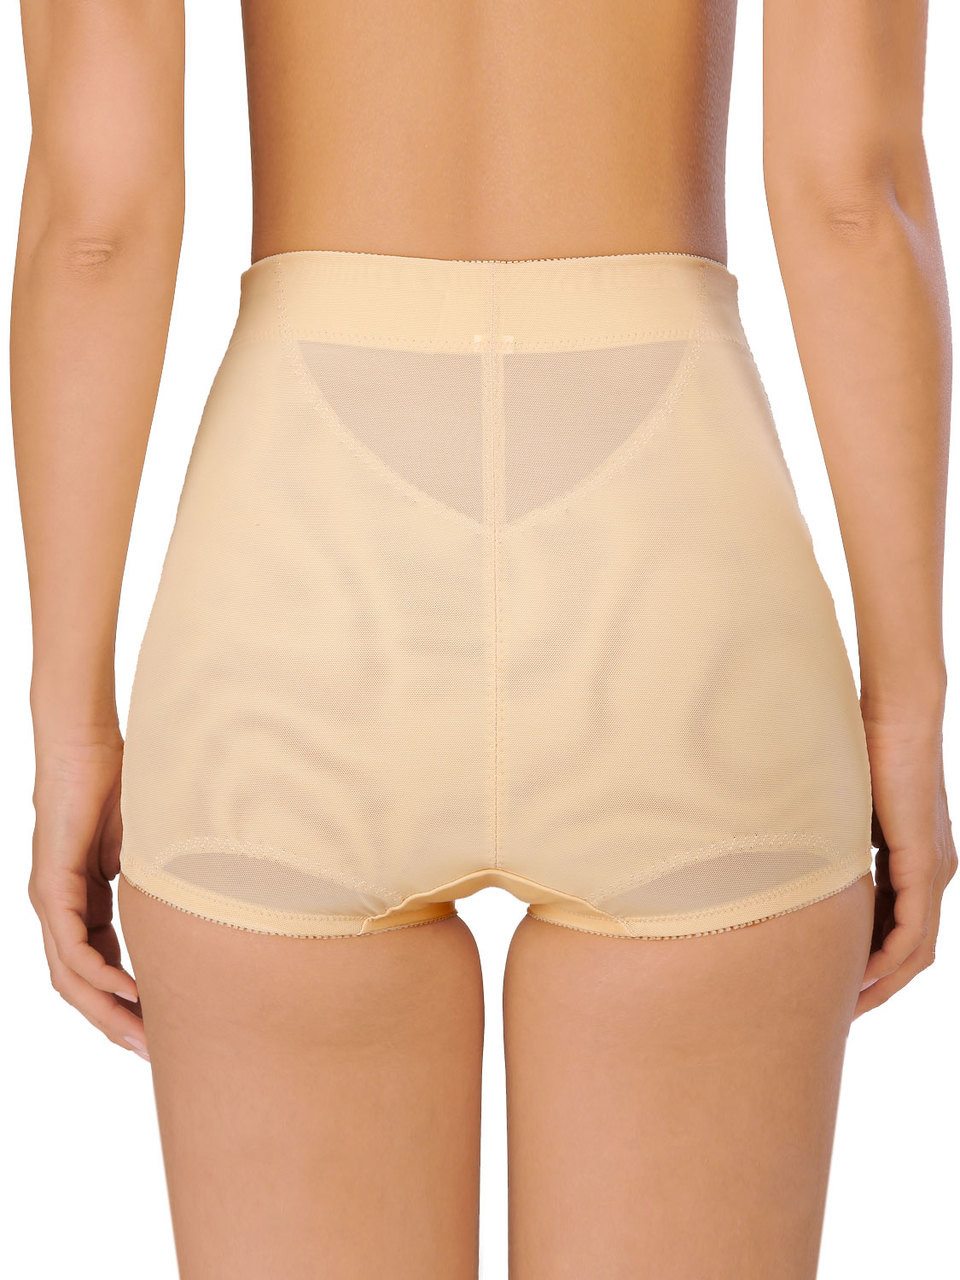 Firm control panty girdle 0193  Panty girdle, Women girdle, Panties